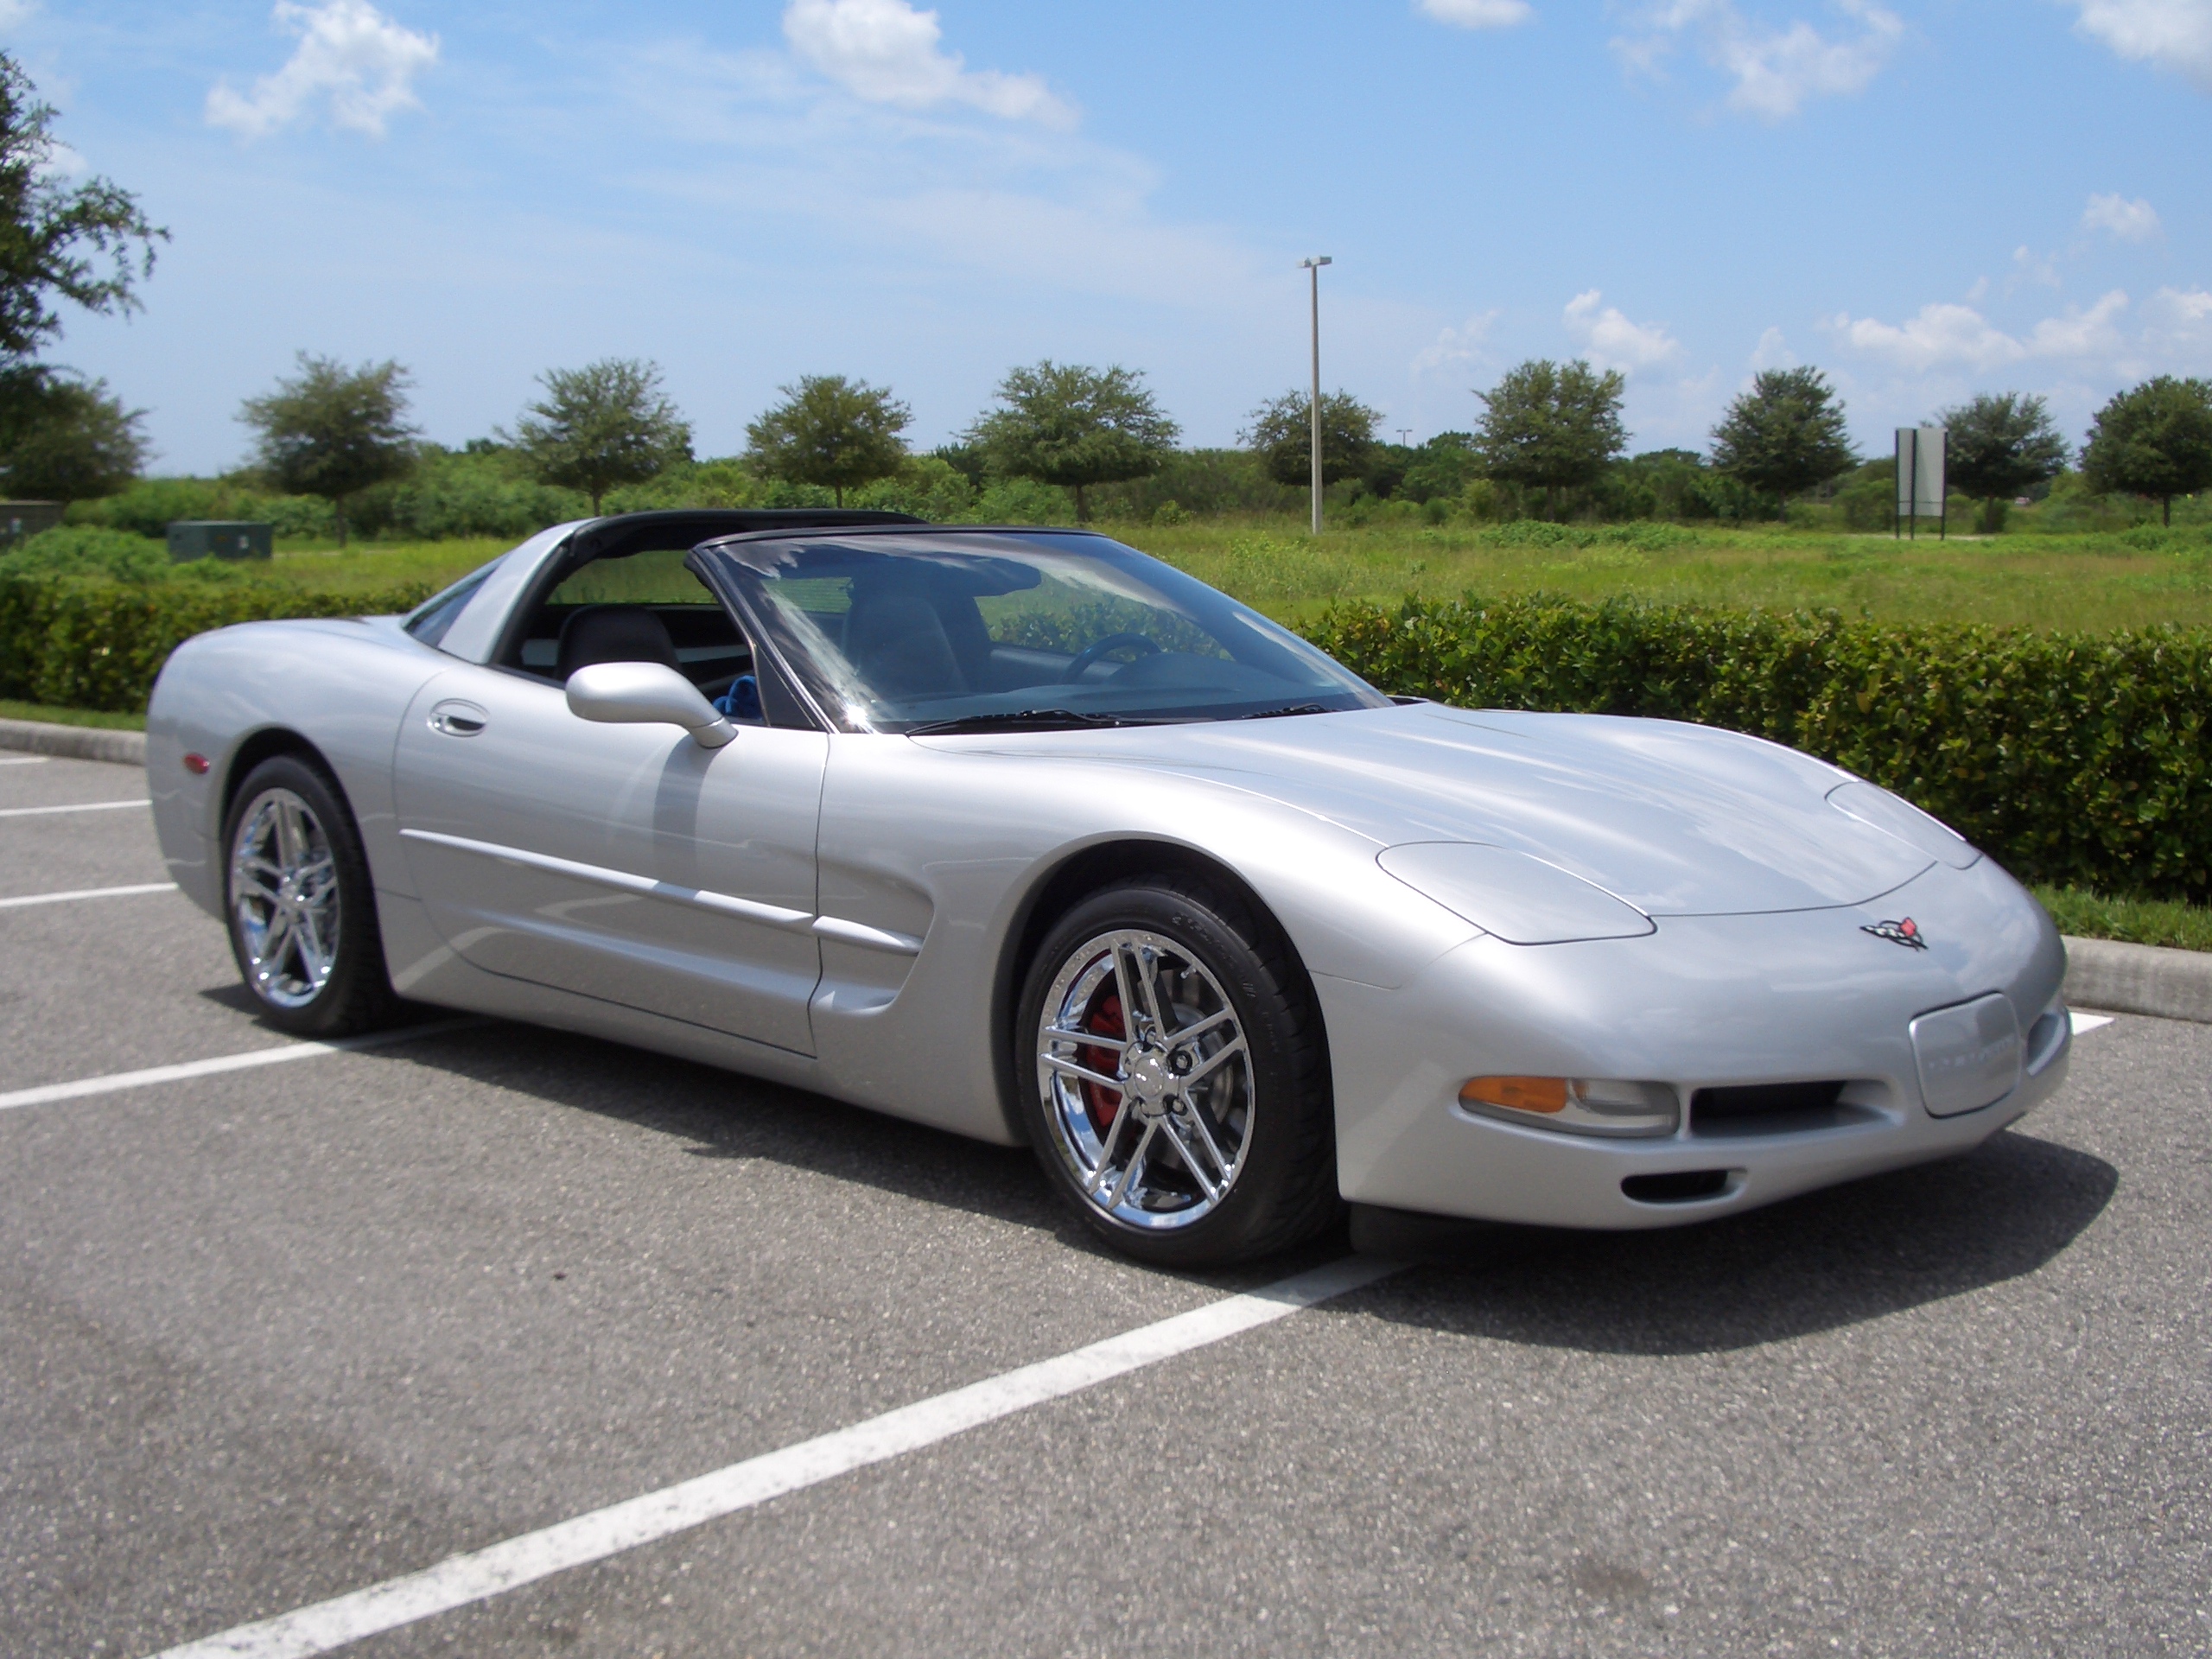 Corvette Sales on 1997 Corvette Coupe 1997 Corvette C5 46500 Miles 350hp Tampa Fl 813